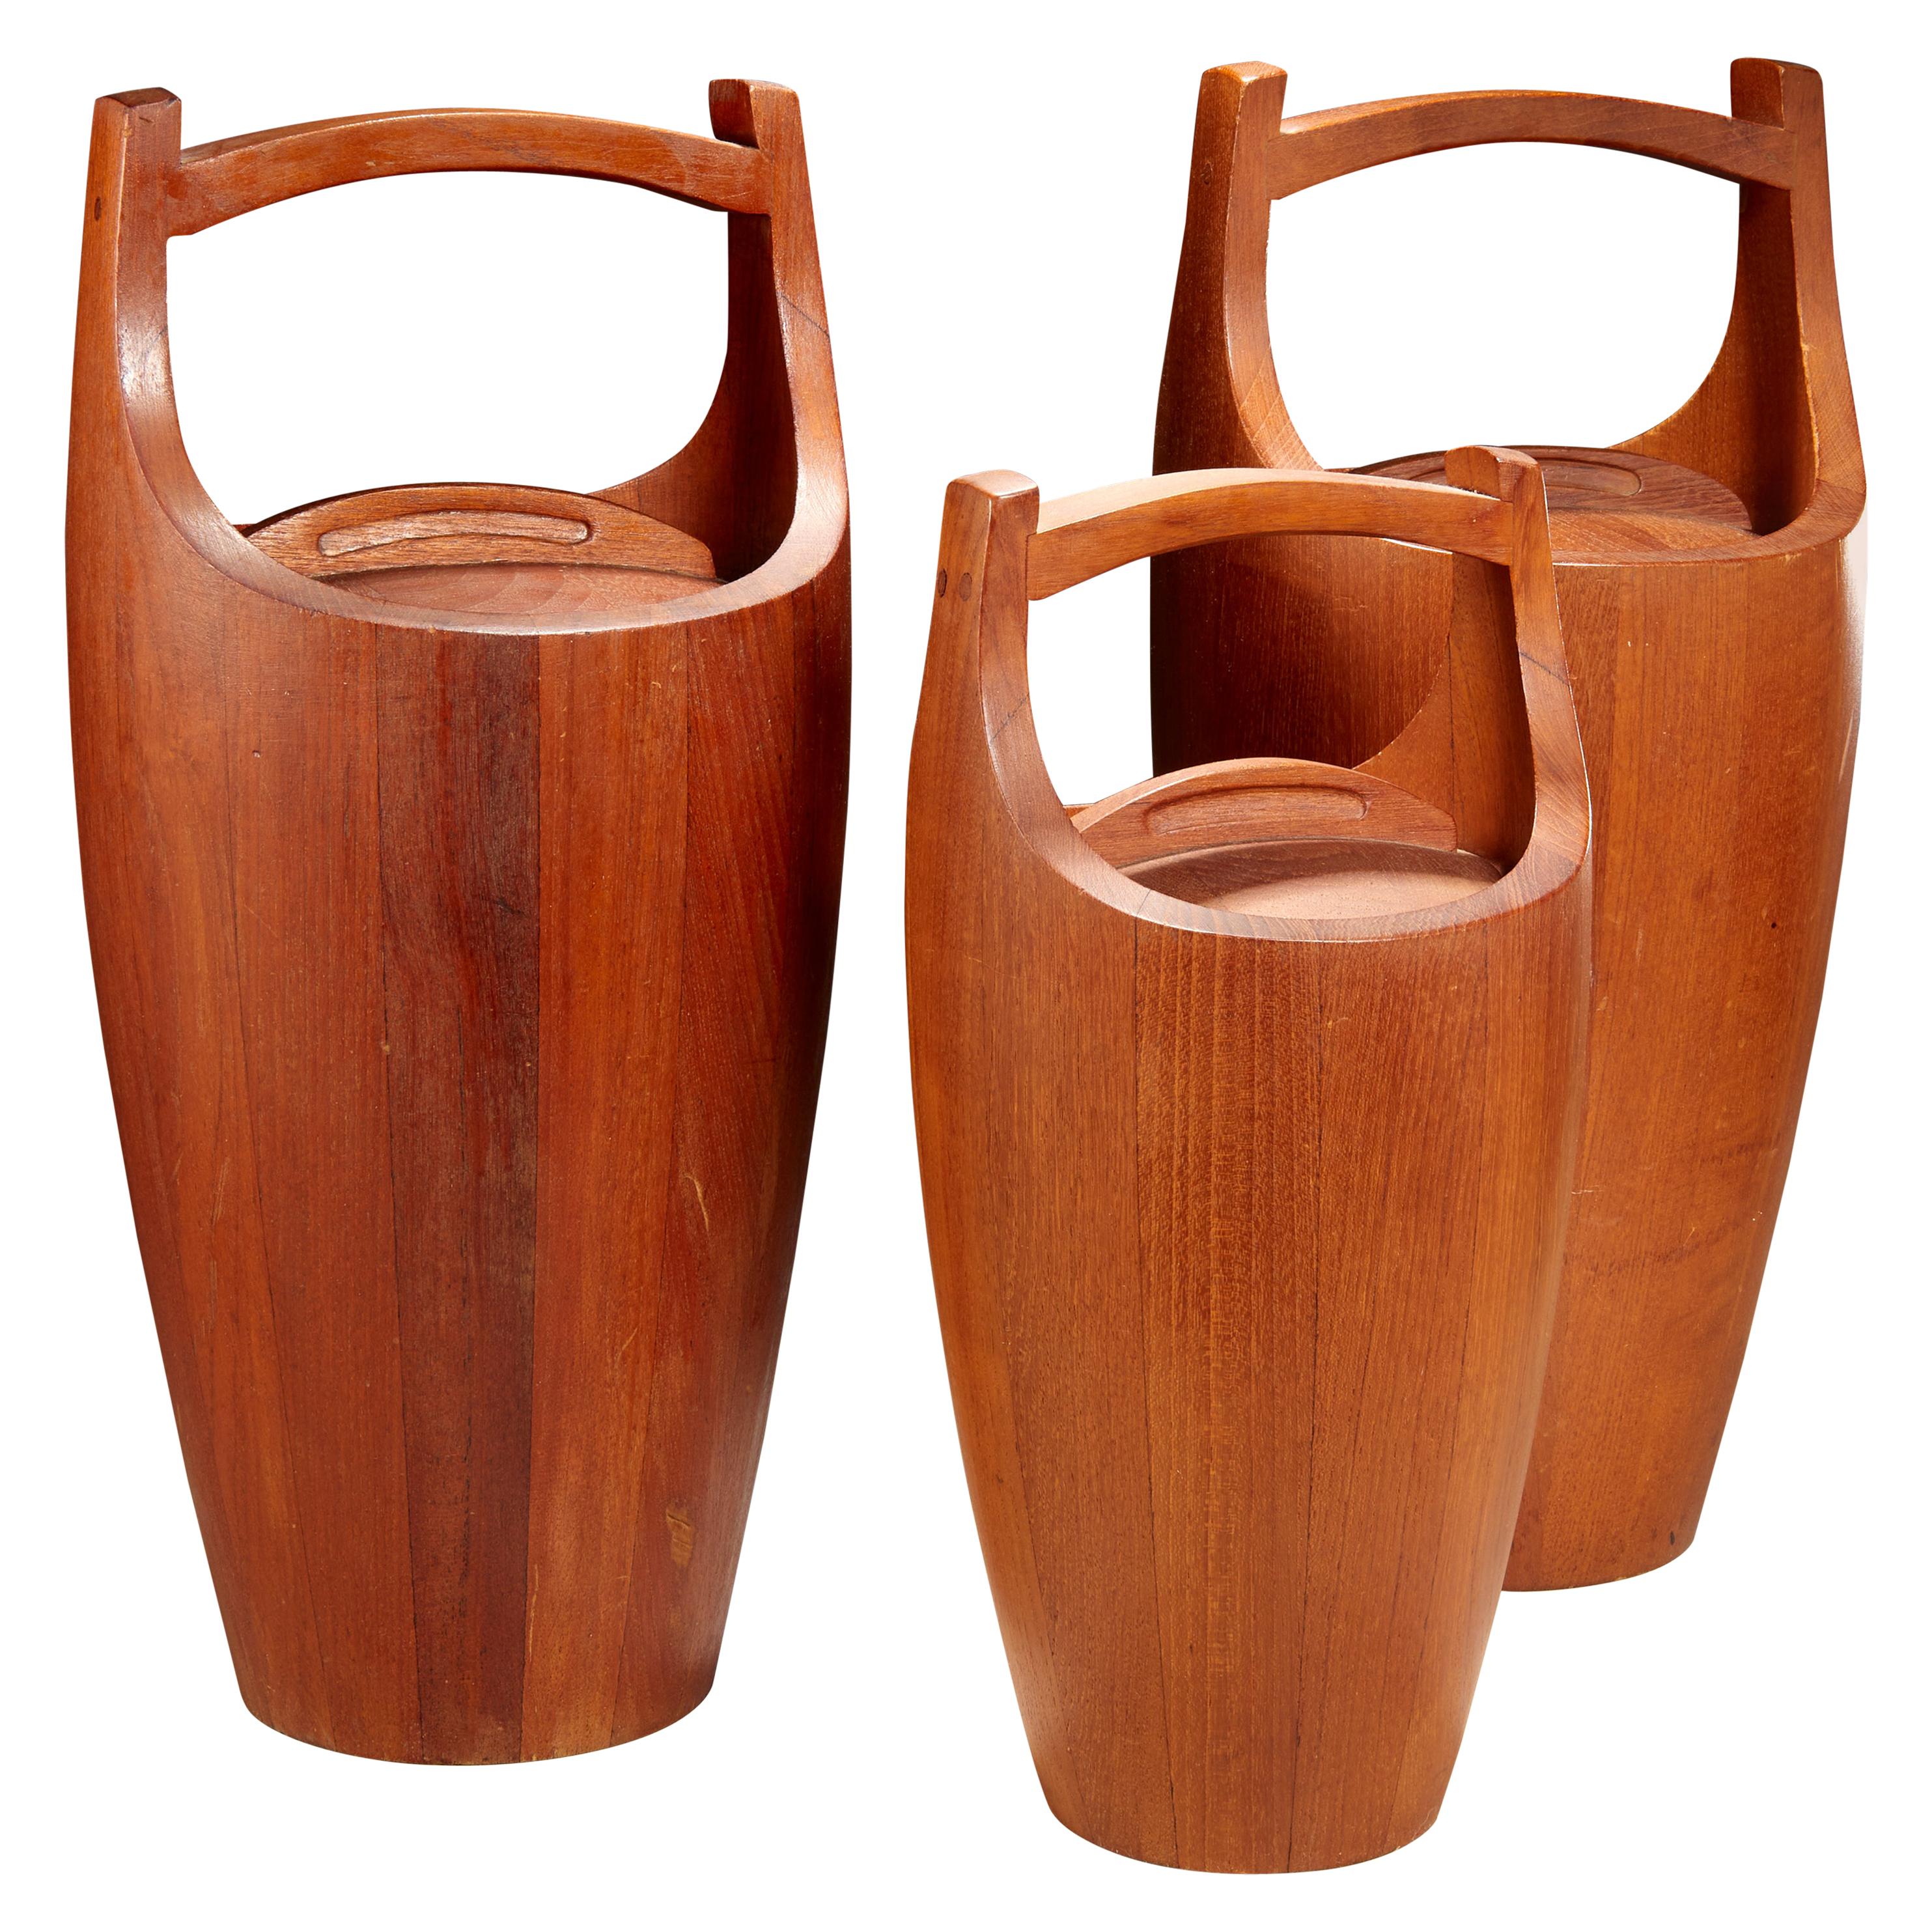 Set of 3 Teak “Congo” Ice Buckets by Jens Quistgaard for Dansk